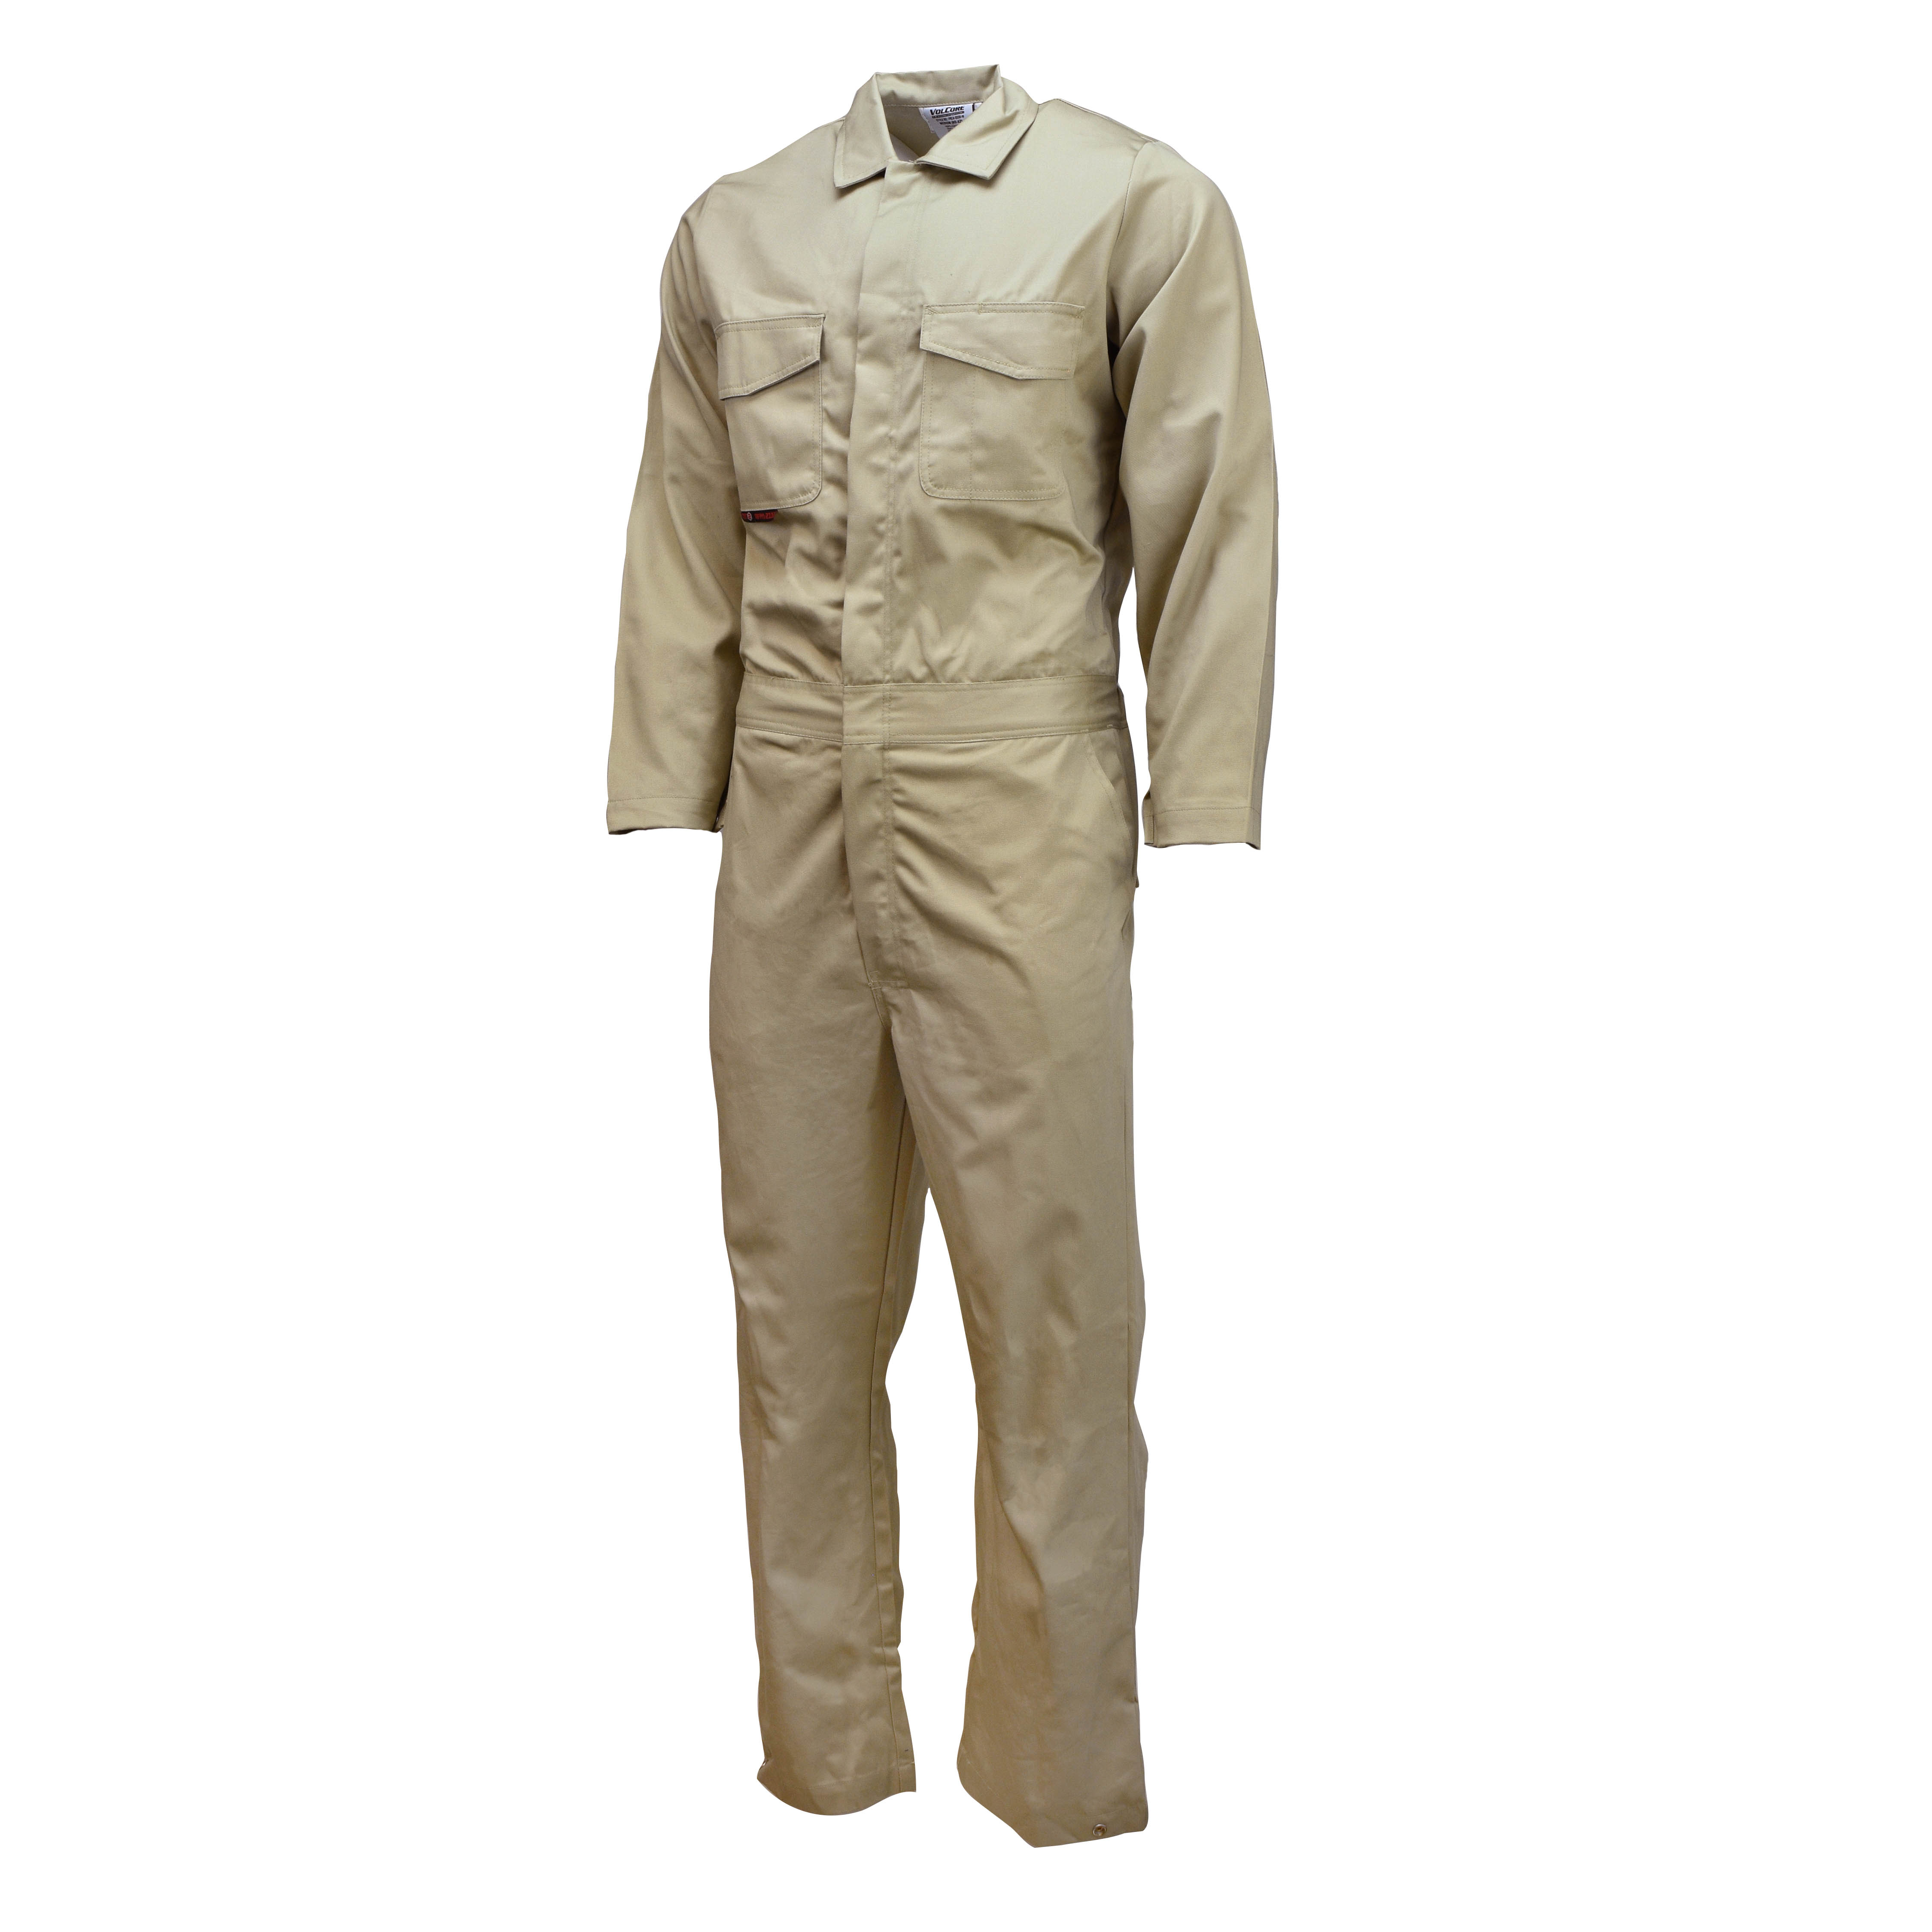 FRCA-003 VolCore™ Cotton FR Coverall - Khaki - Size 2X